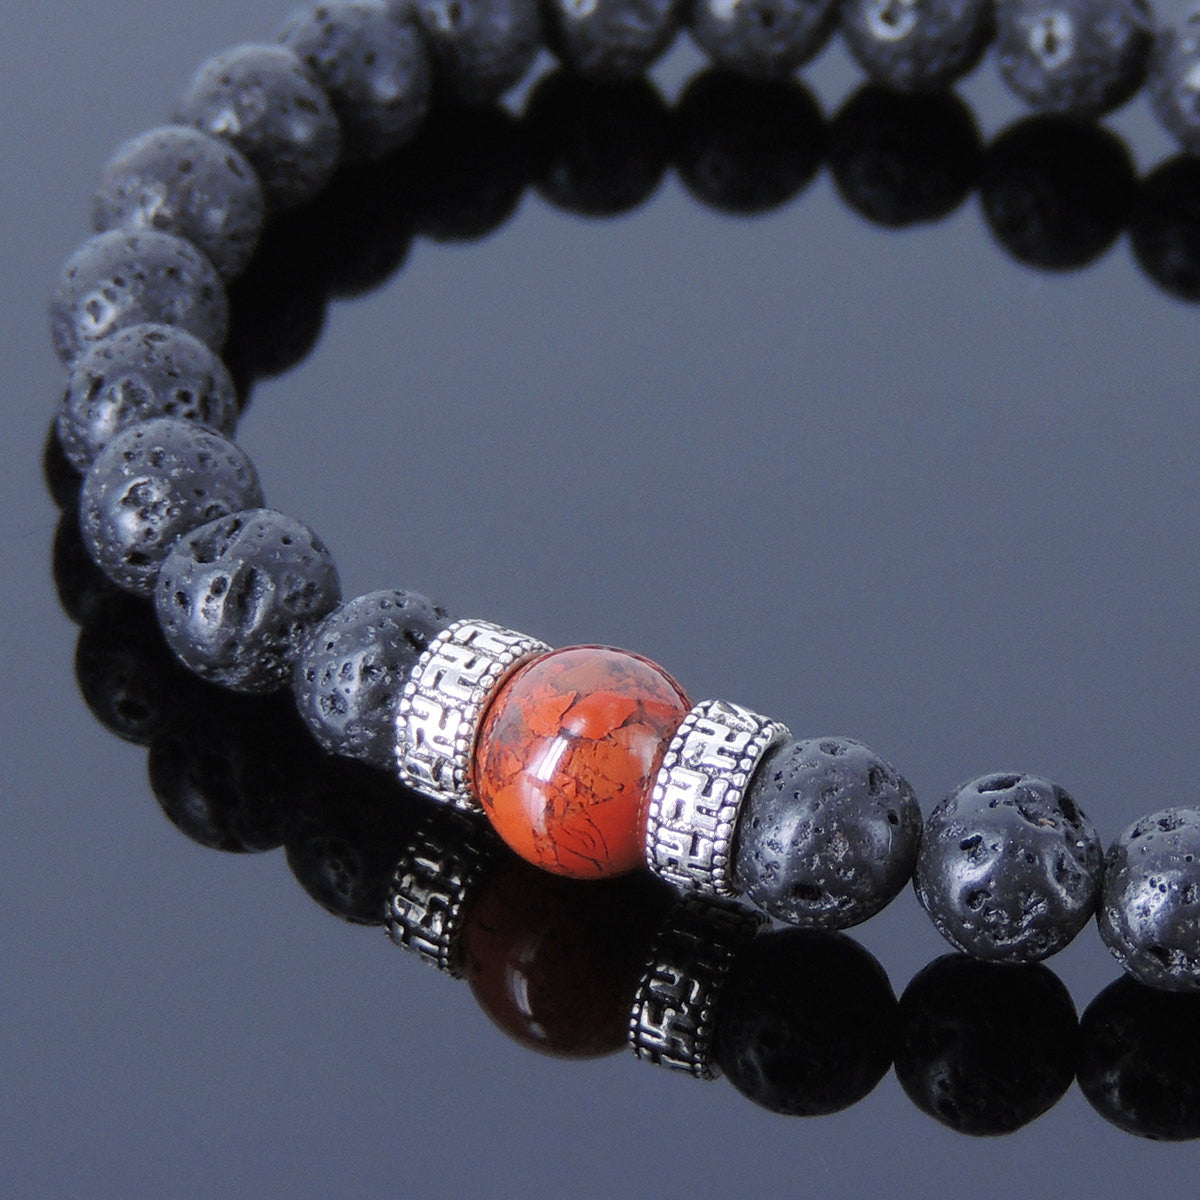 Red Jasper & Lava Rock Healing Gemstone Bracelet with S925 Sterling Silver Buddhism Spacer Beads - Handmade by Gem & Silver BR388